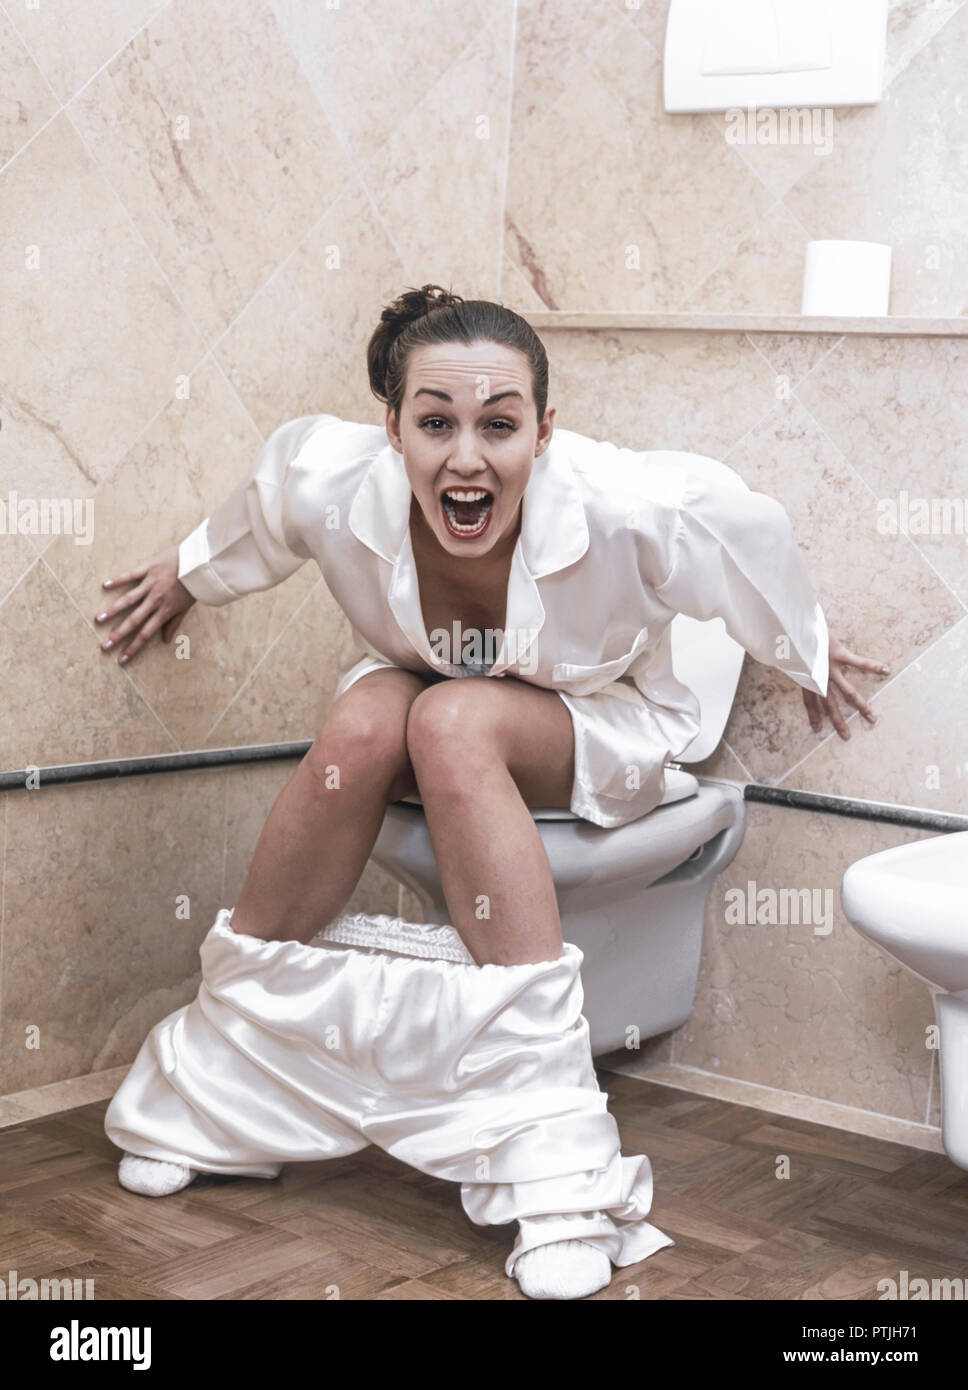 Girl woman peeing washroom bathroom toilet